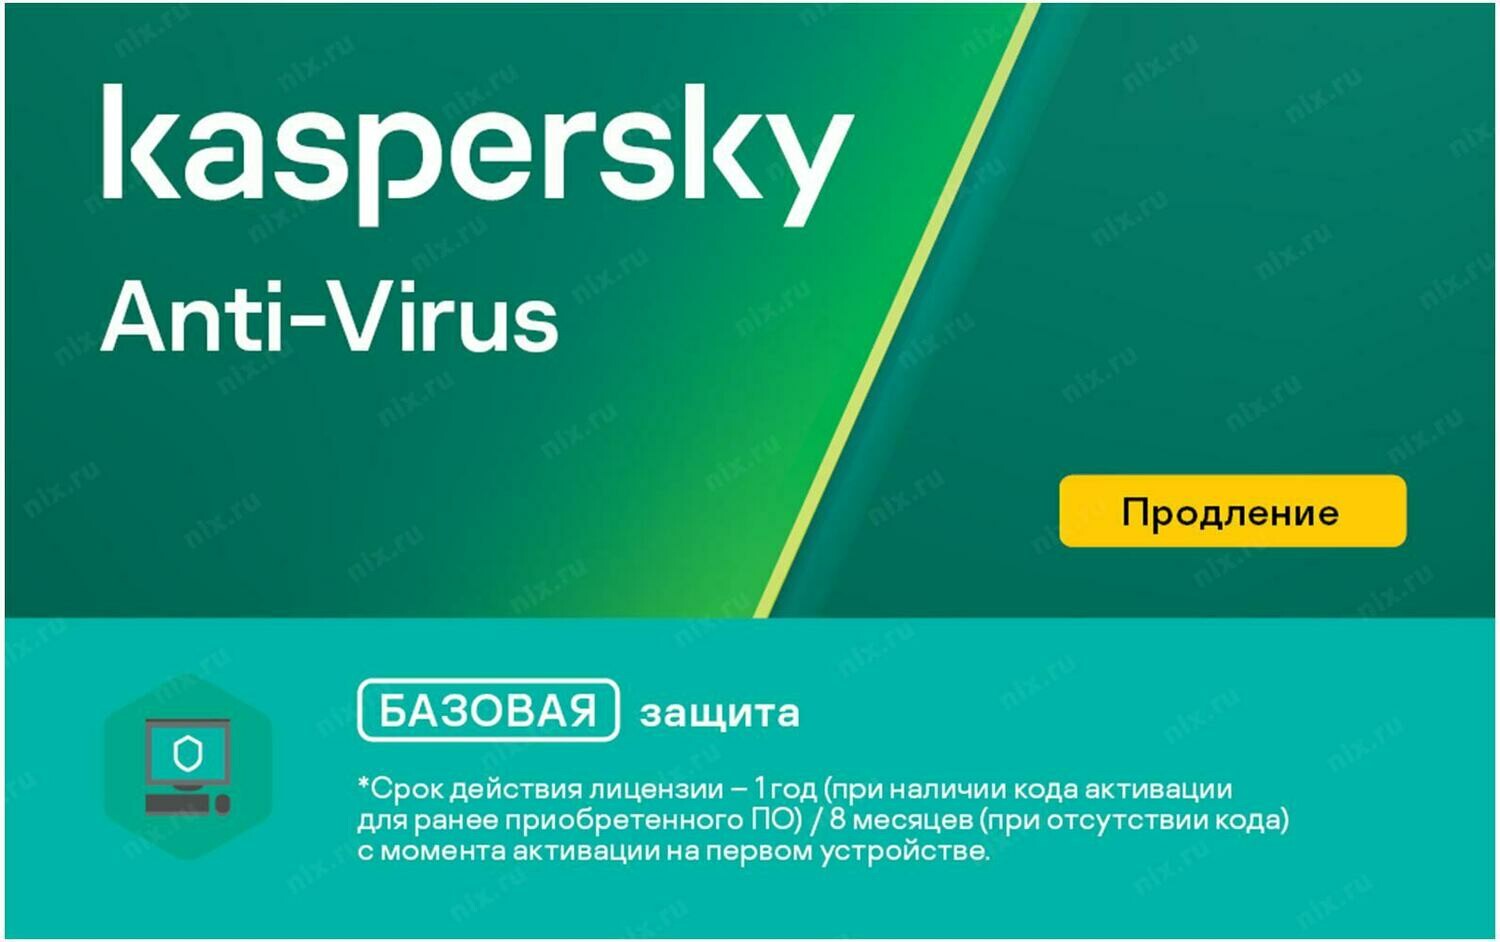 Карточка продления антивирус Kaspersky Anti-Virus 1 год, 2 ПК.